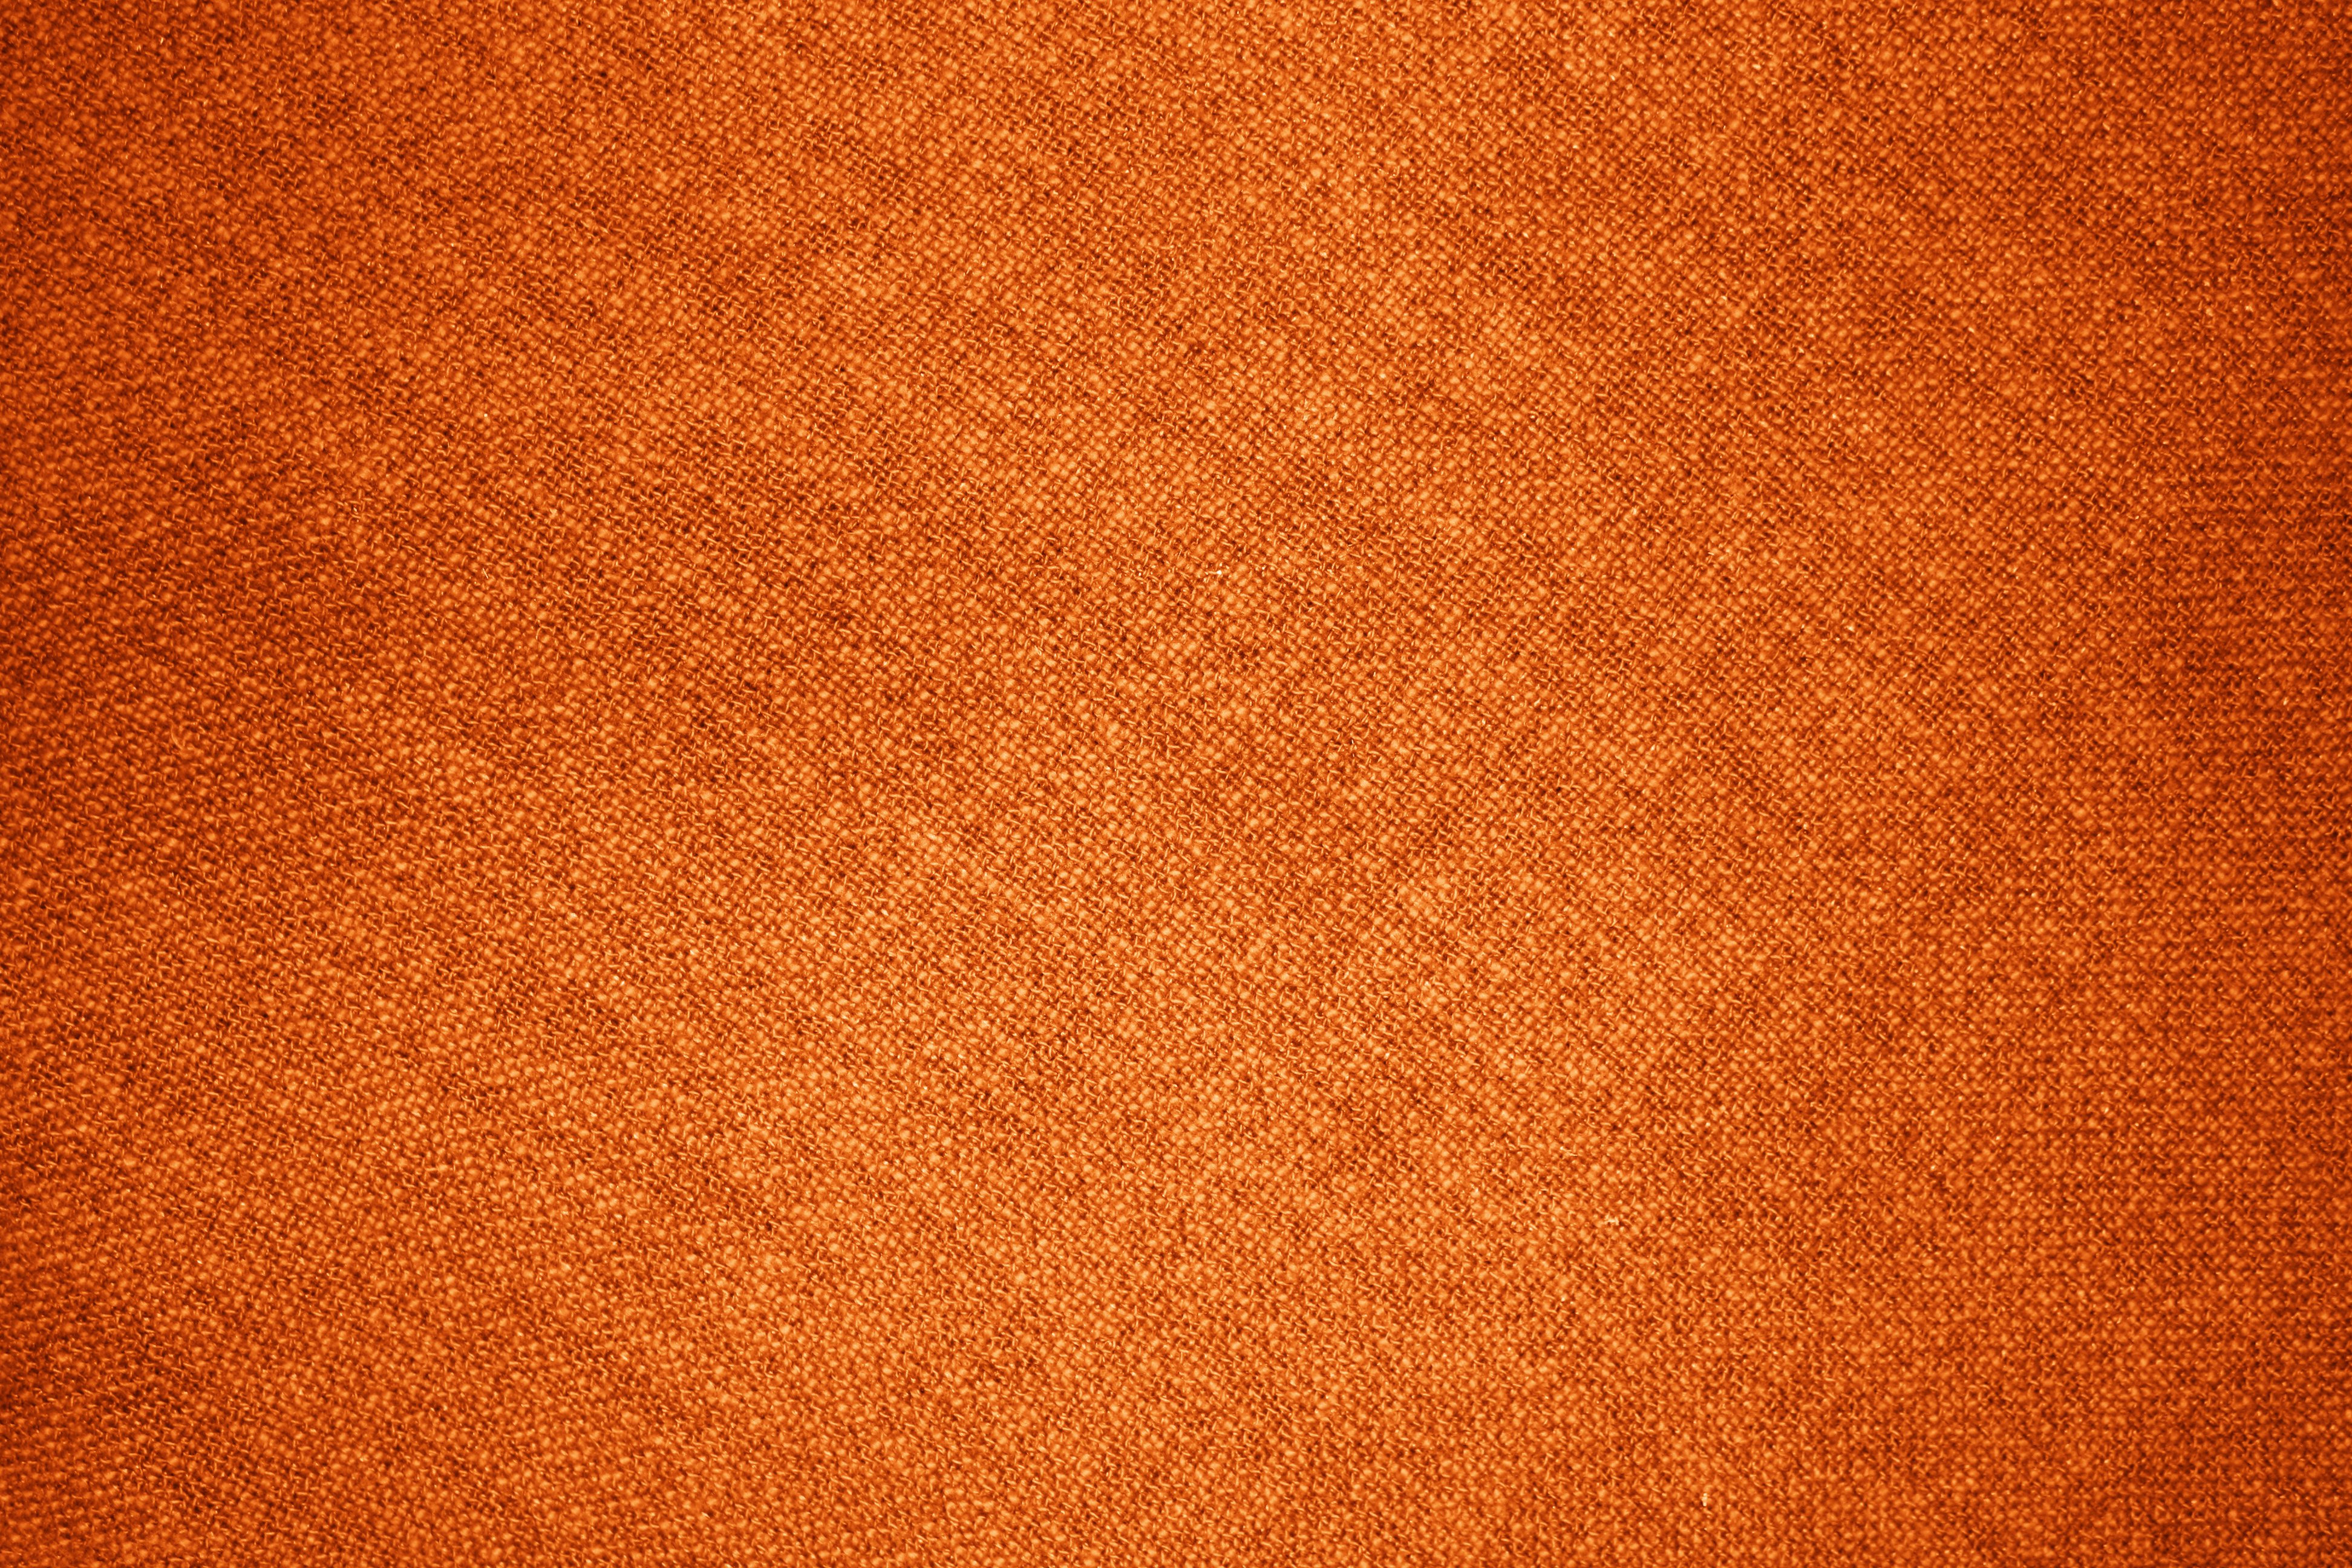 Orange Fabric Texture High Resolution Photo Dimensions